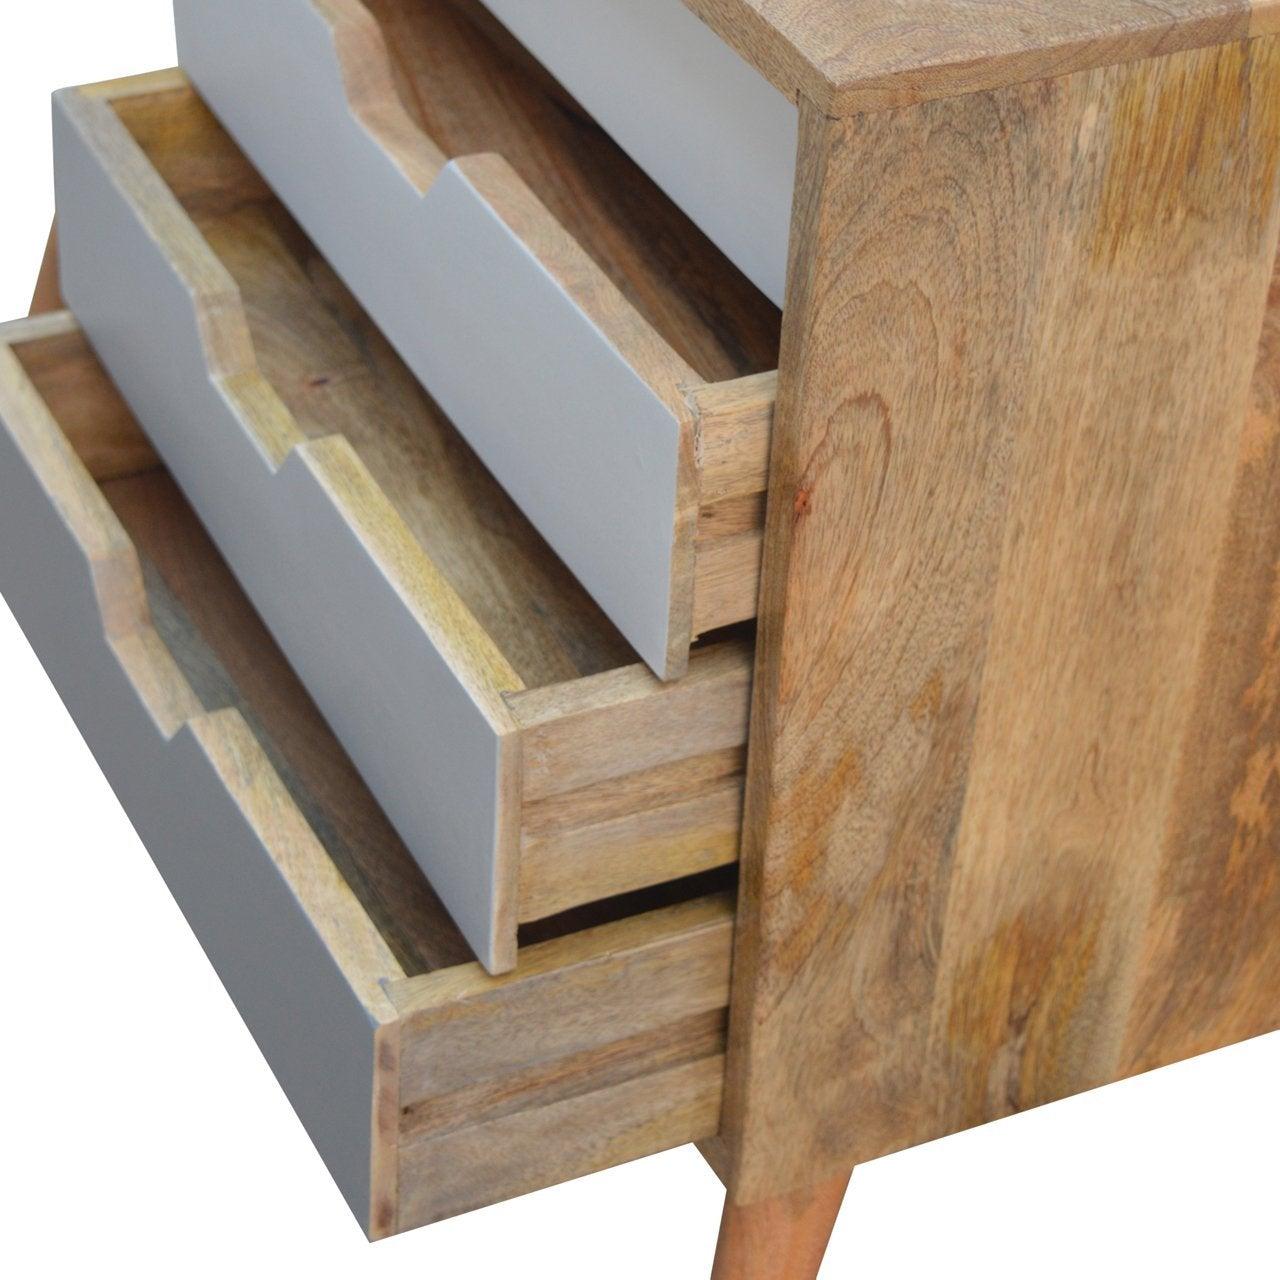 Nordic sliding cabinet with 4 drawers - crimblefest furniture - image 10